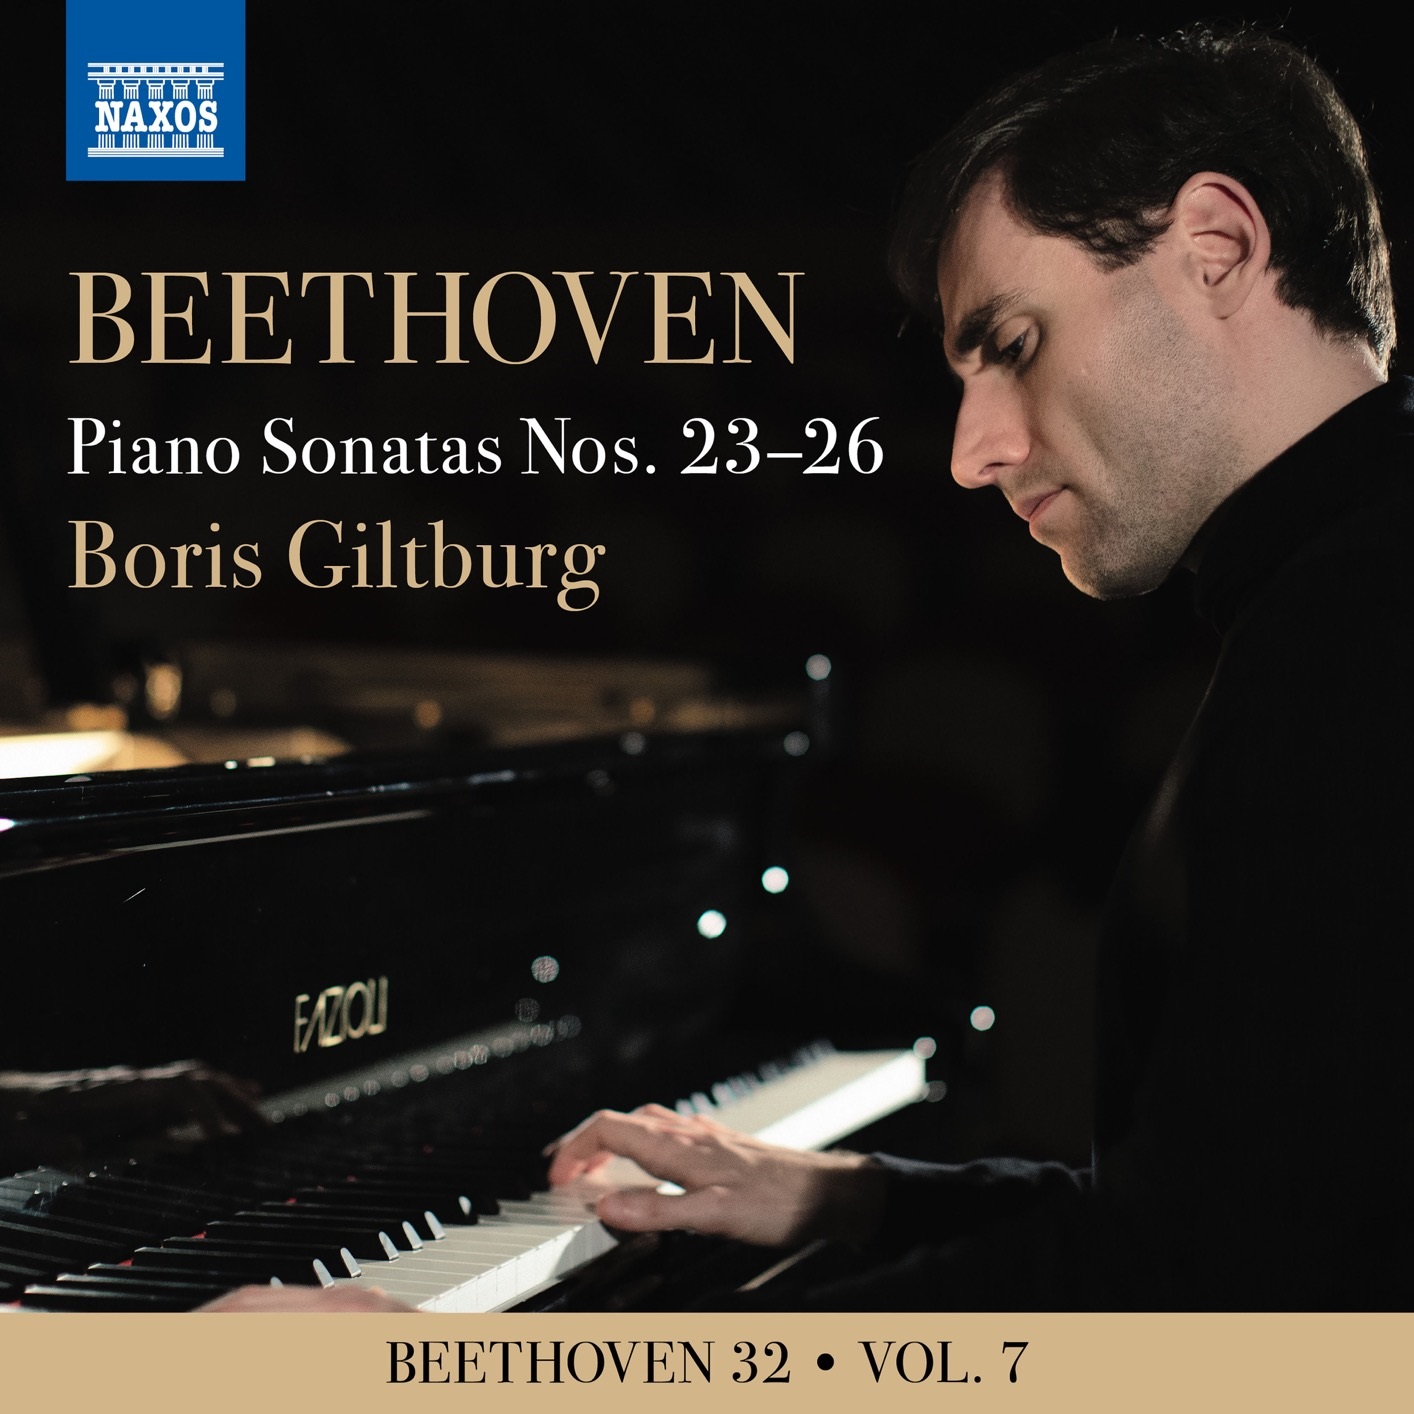 Boris Giltburg – Beethoven 32, Vol. 7: Piano Sonatas Nos. 23-26 (2020) [FLAC 24bit/96kHz]